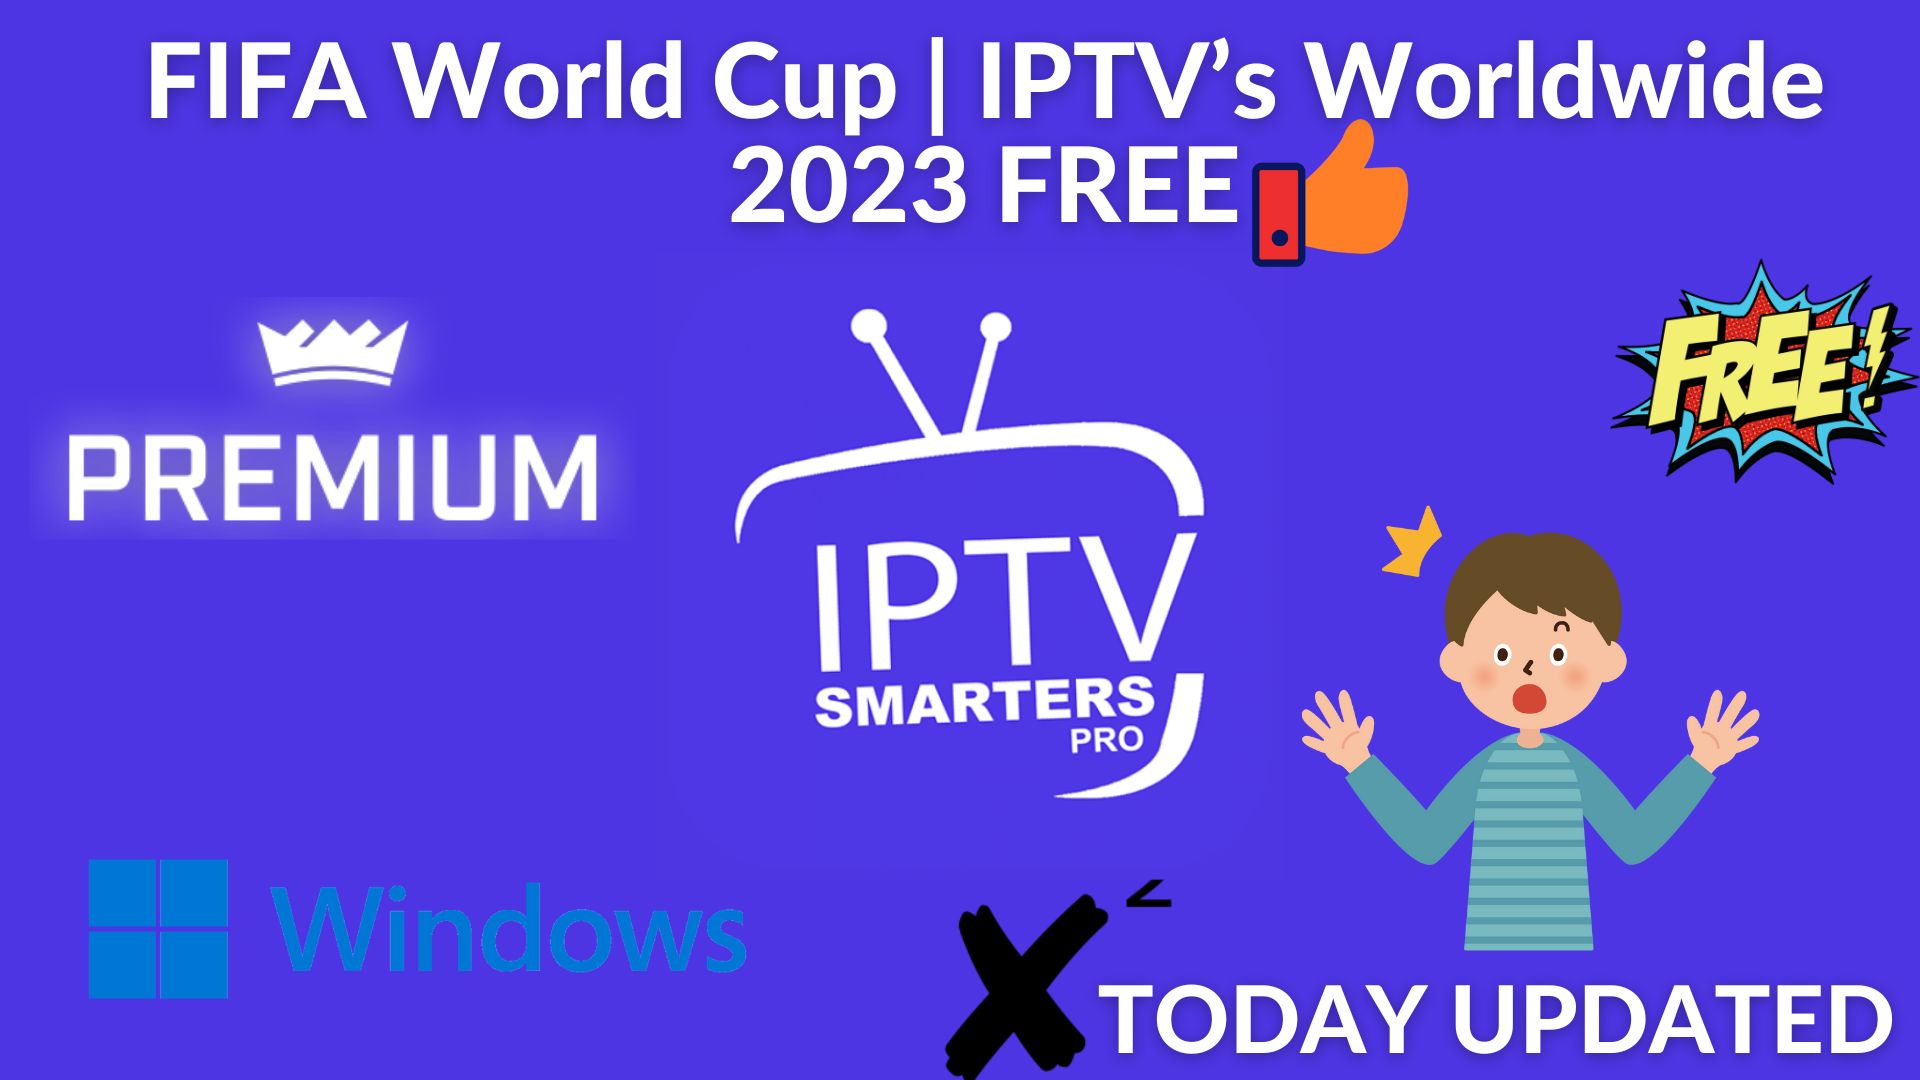 Fifa world cup | iptv’s worldwide 2023 free